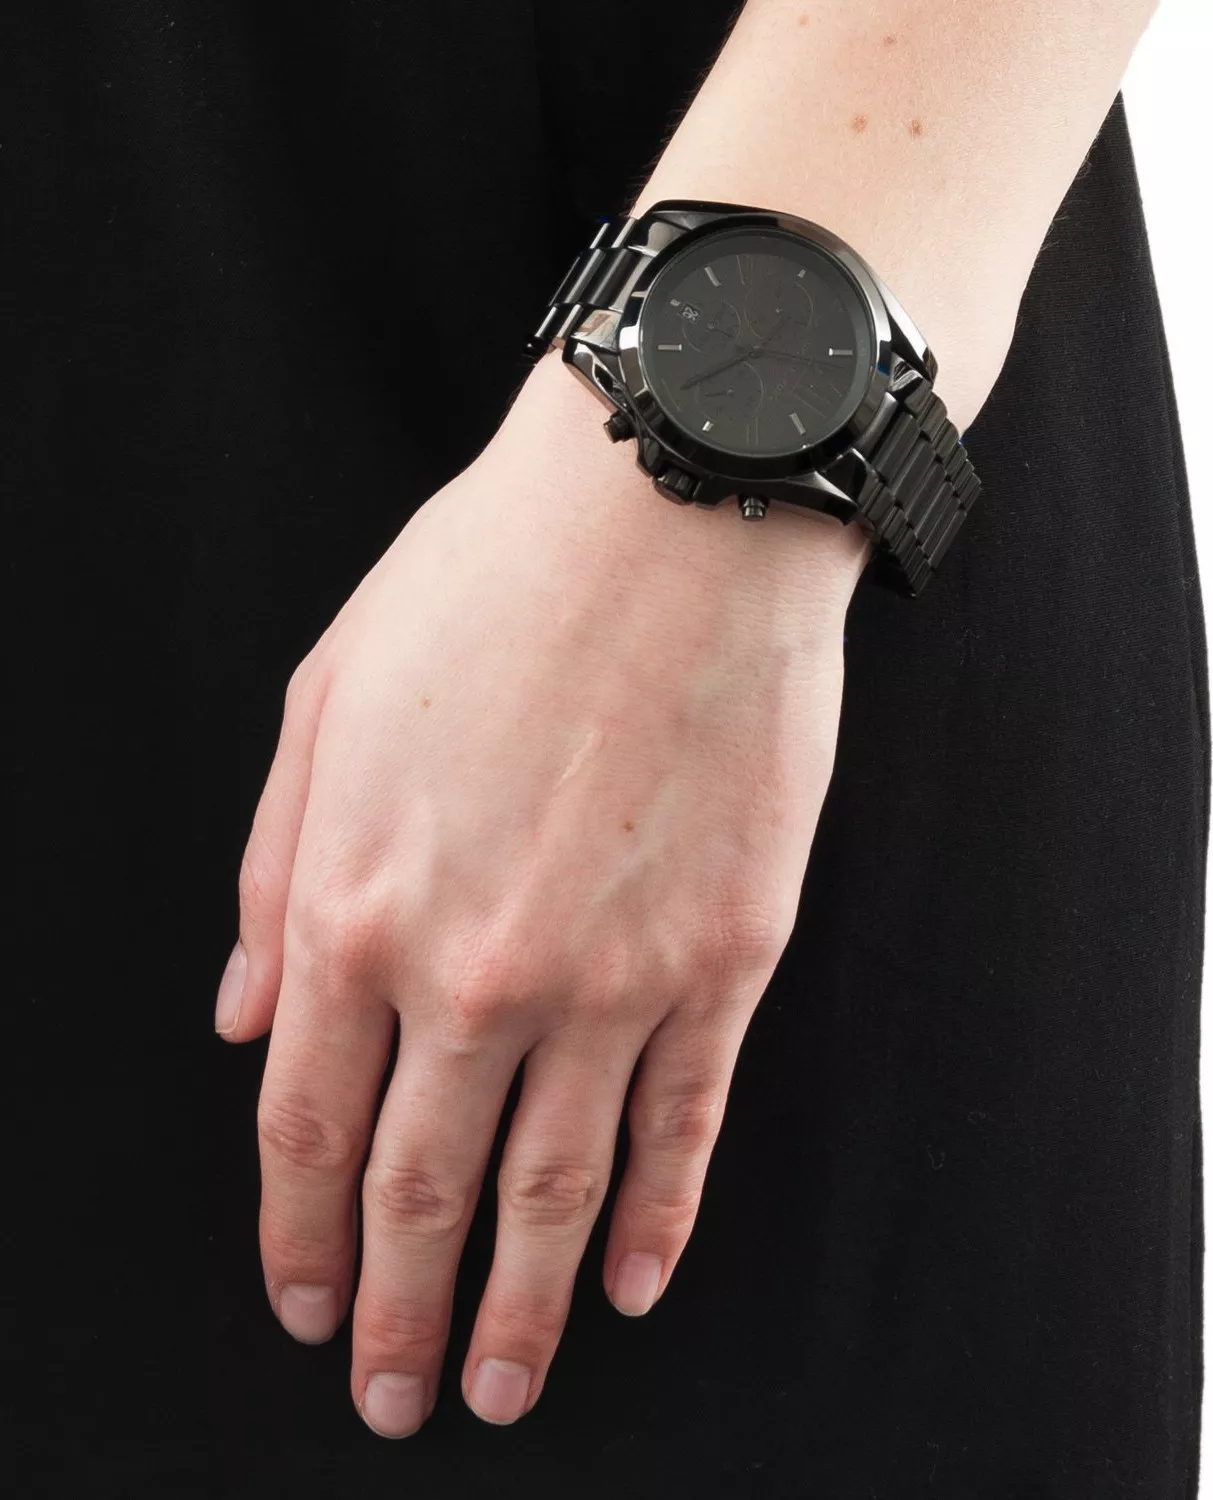 Michael Kors Bradshaw Black Watch 43mm